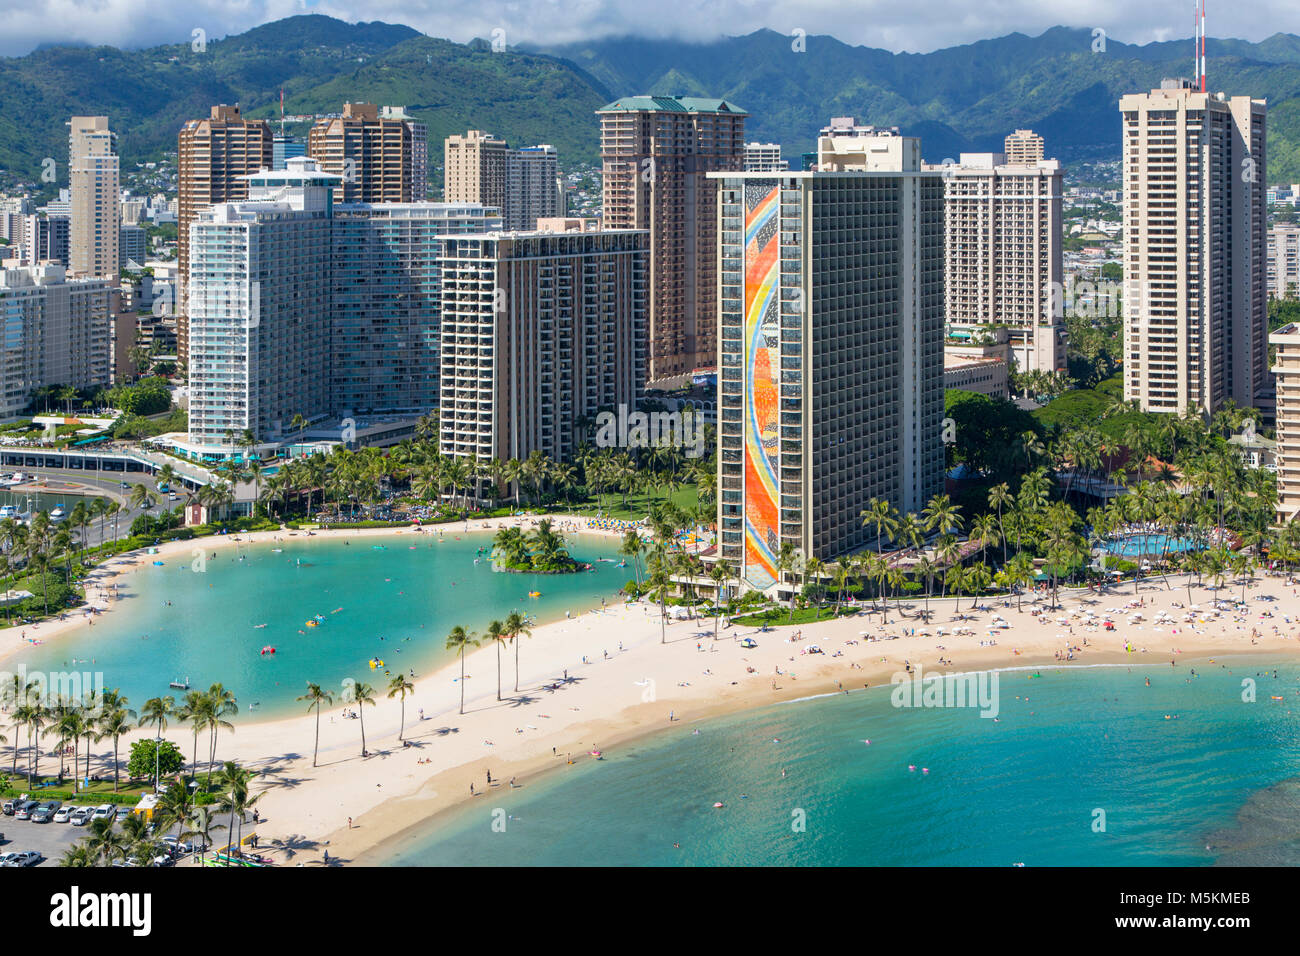 Honolulu, Hawaii - December 30, 2022: Aloha sign at the Hilton Hawaiian  Village Stock Photo - Alamy